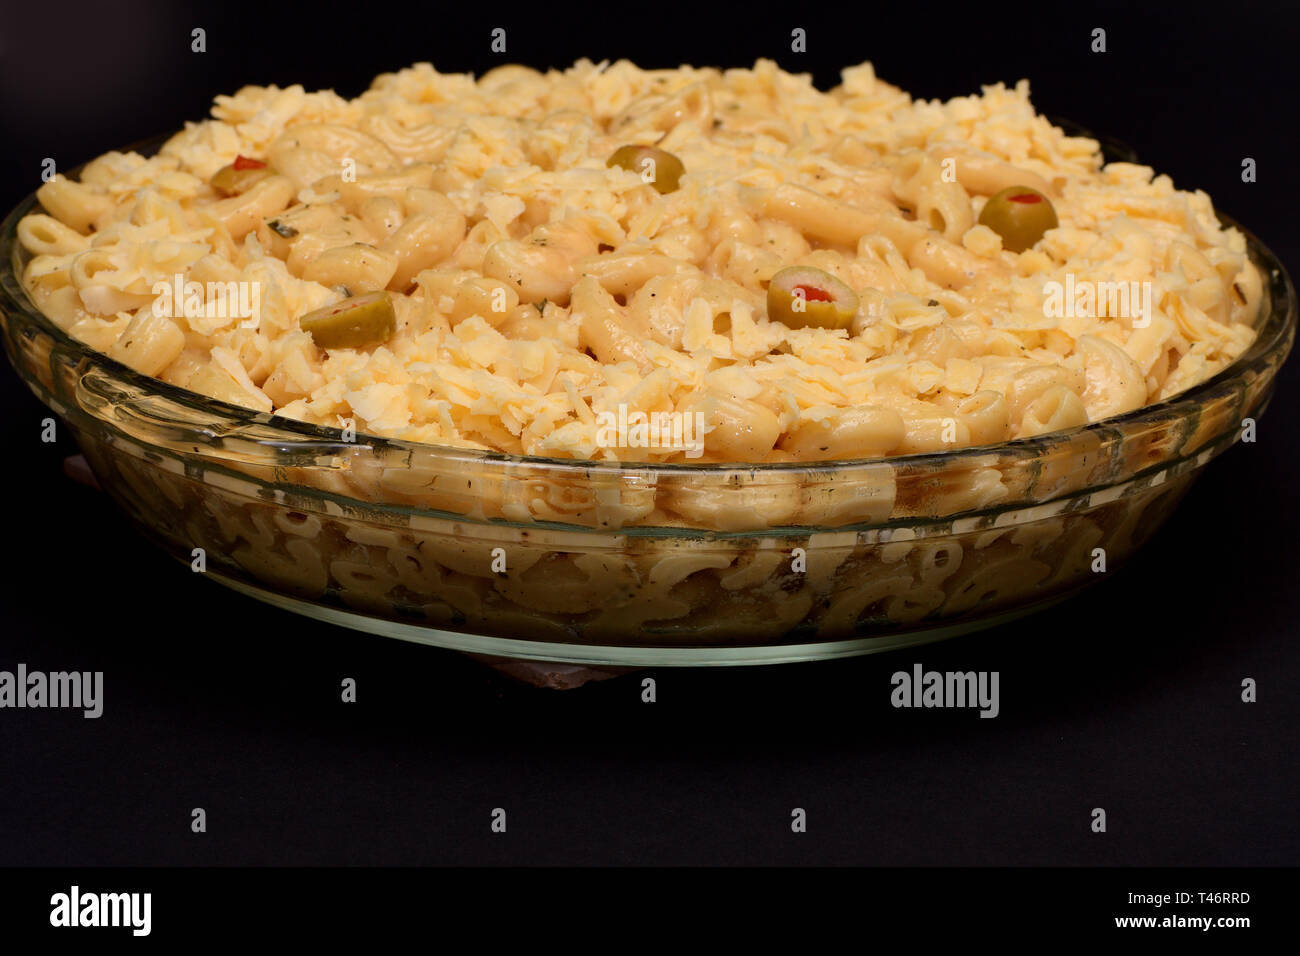 isolated dish of pasta on black background Stock Photo